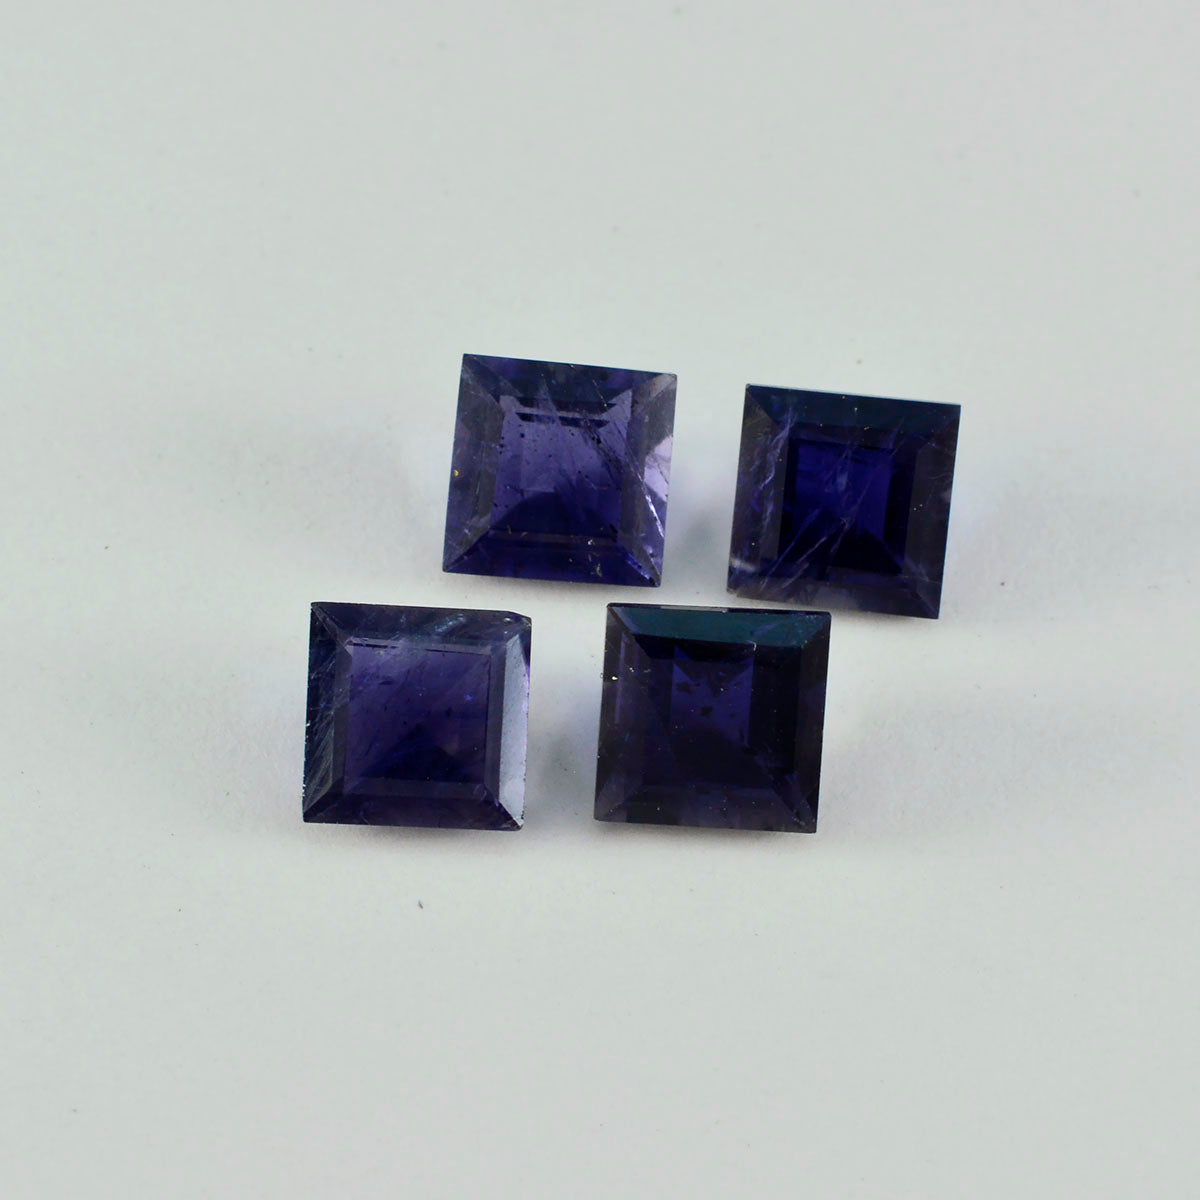 Riyogems 1PC Blue Iolite Faceted 15x15 mm Square Shape handsome Quality Gemstone